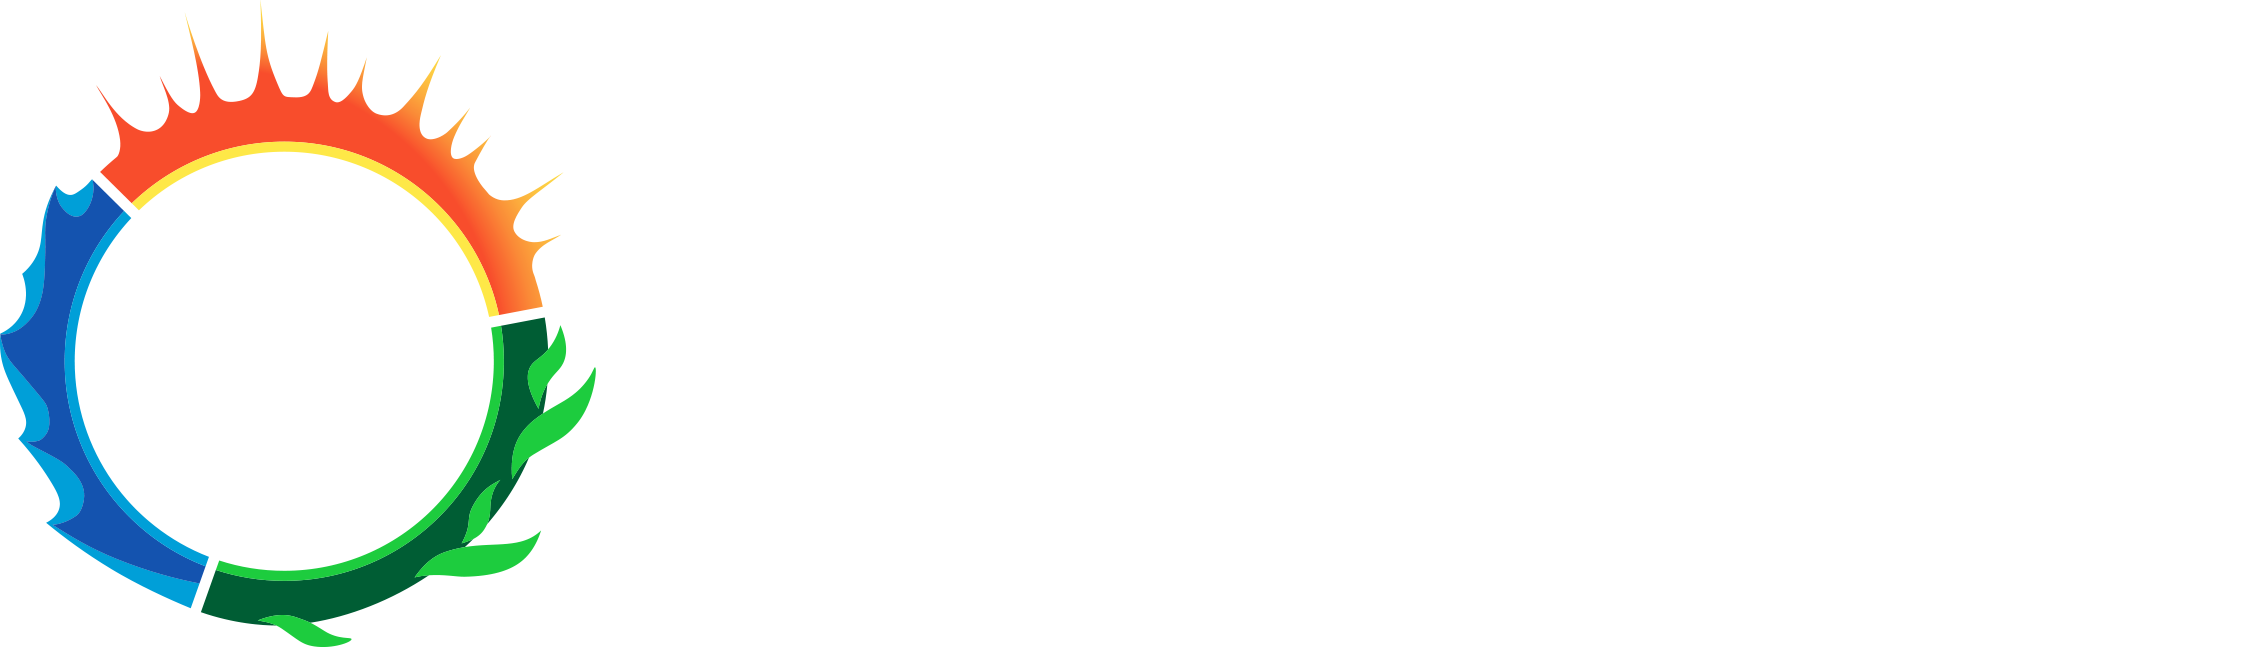 Climate Neutral Cardano